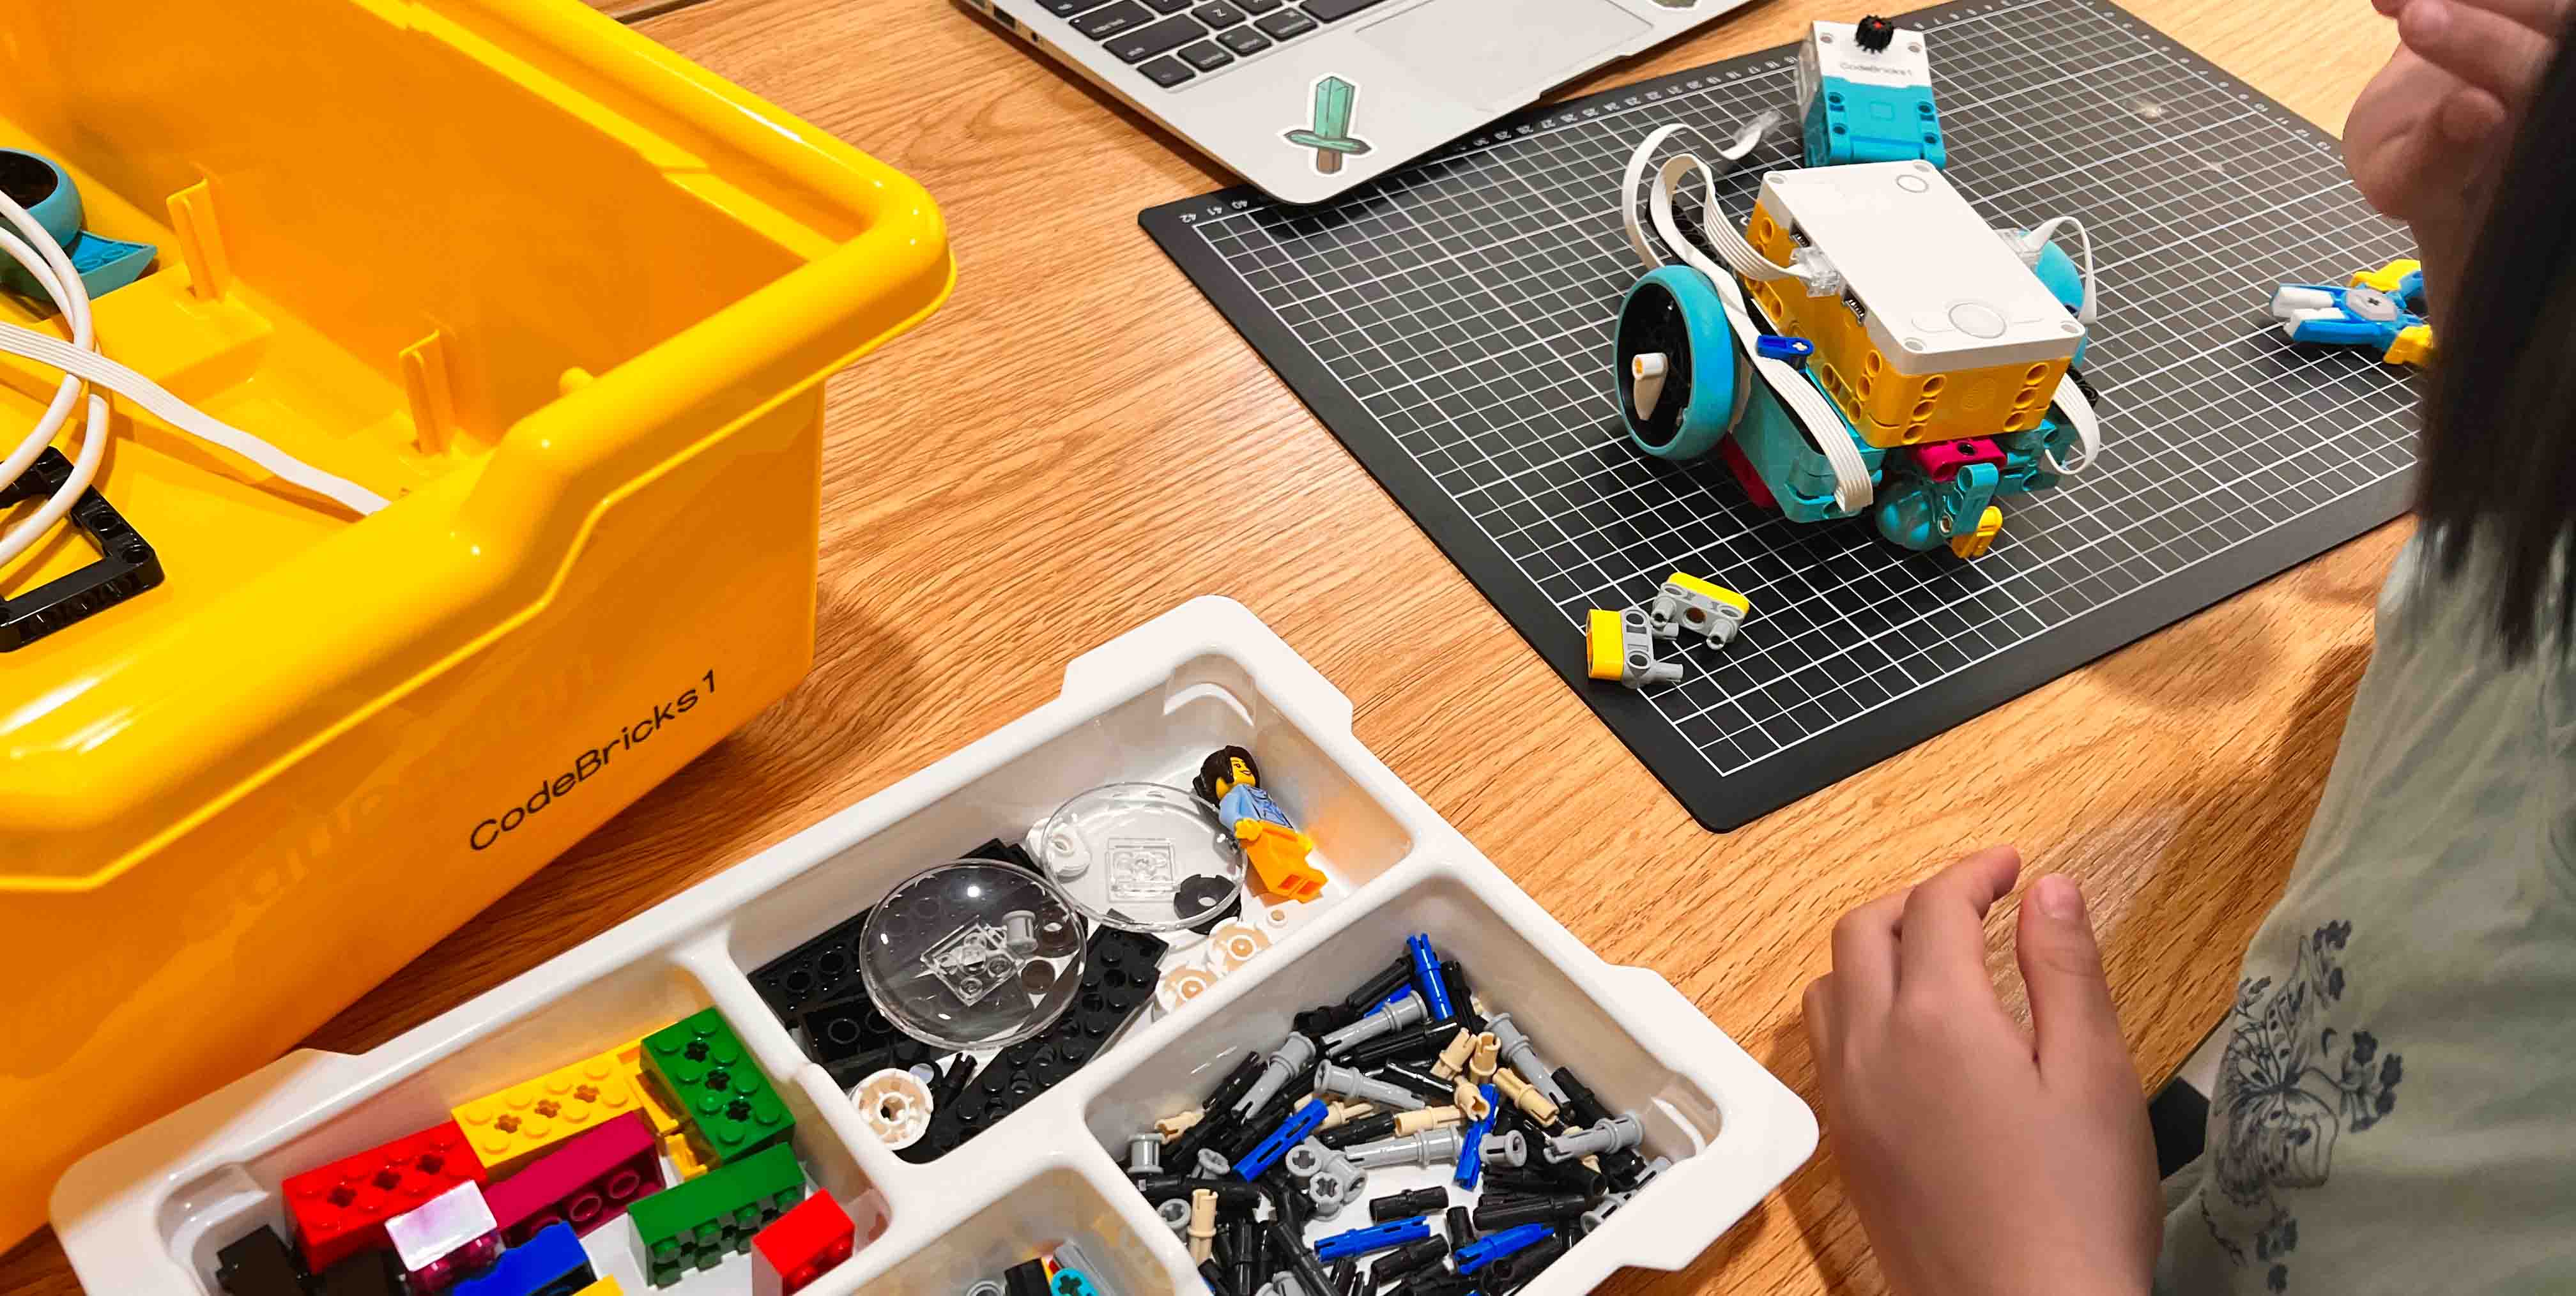 The Ultimate Robotics Kit for STEM